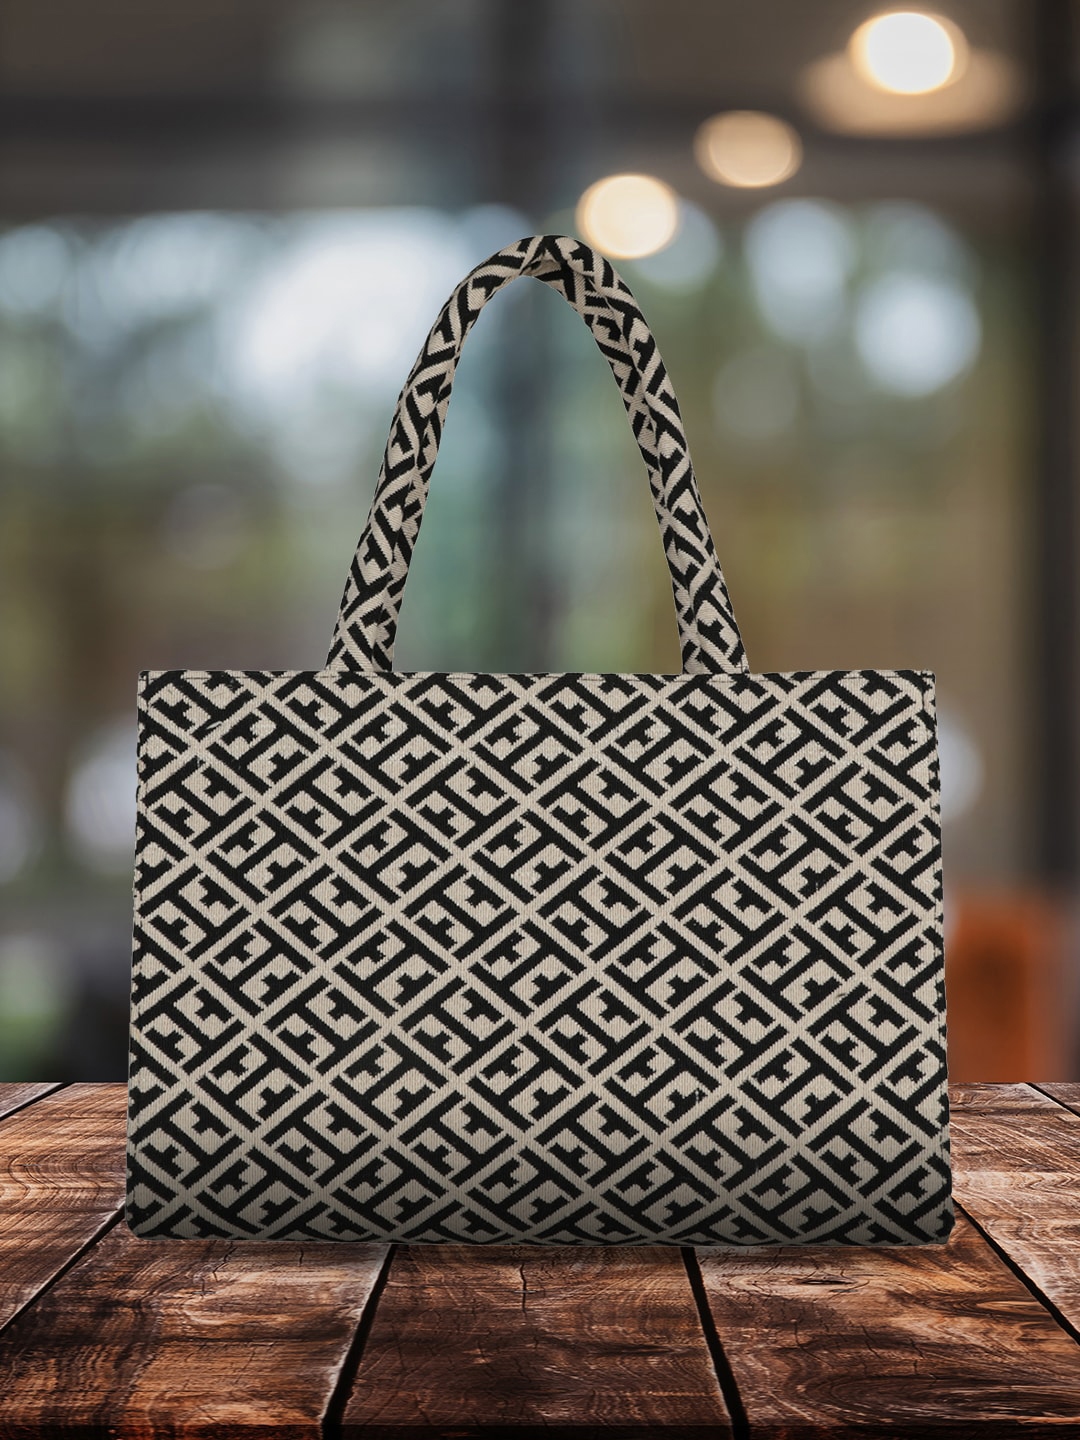 MINI WESST Handbags : Buy MINI WESST Black Party Ethnic Motifs Handheld Bag  Online